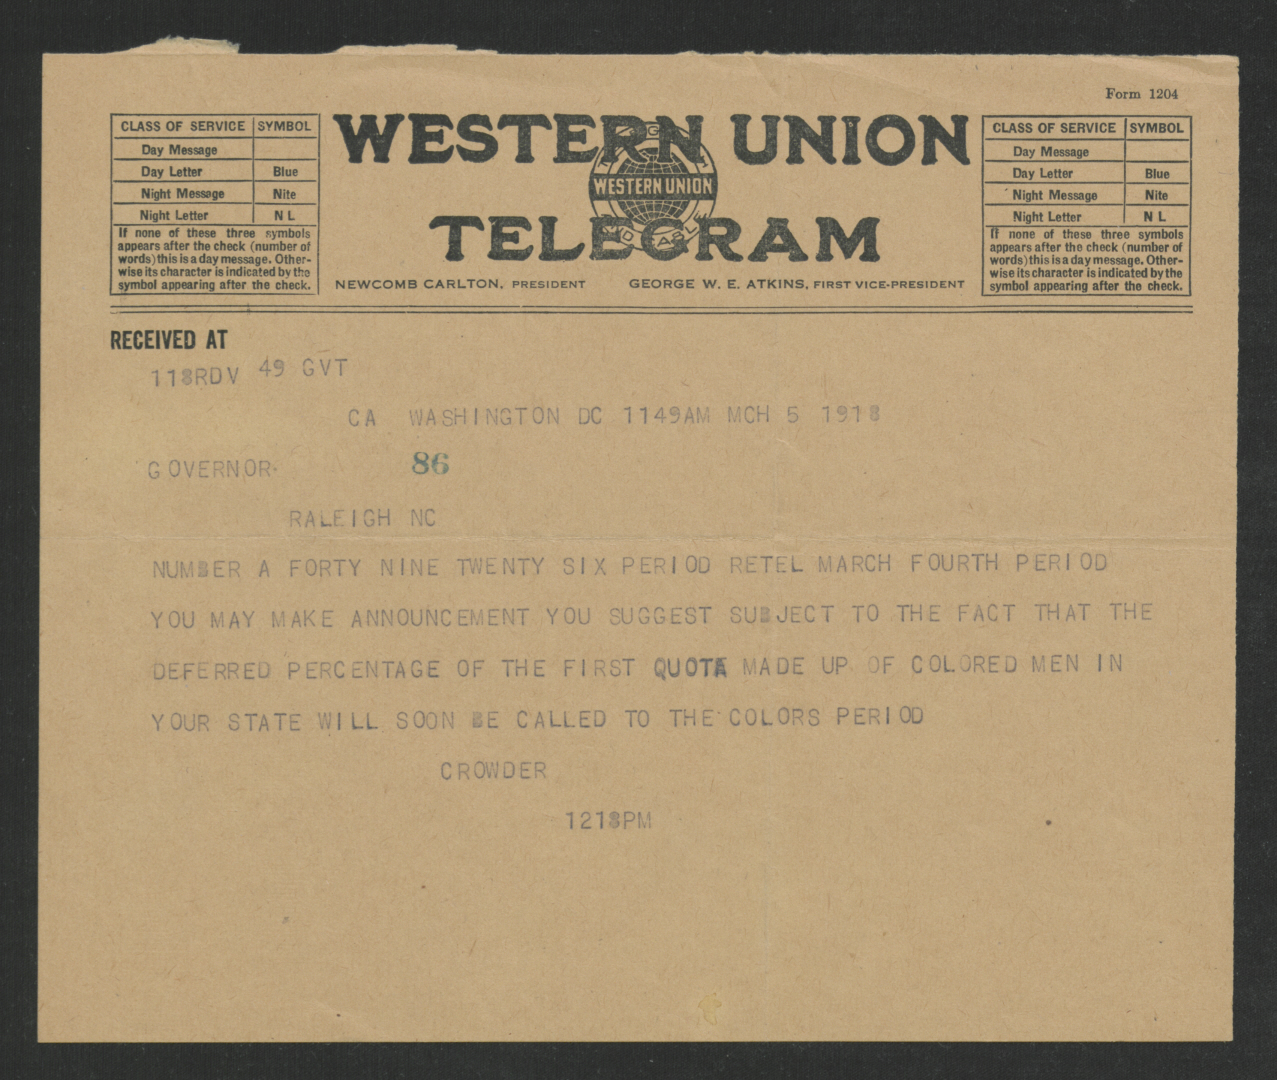 Telegram from Enoch H. Crowder to Thomas W. Bickett, March 5, 1918